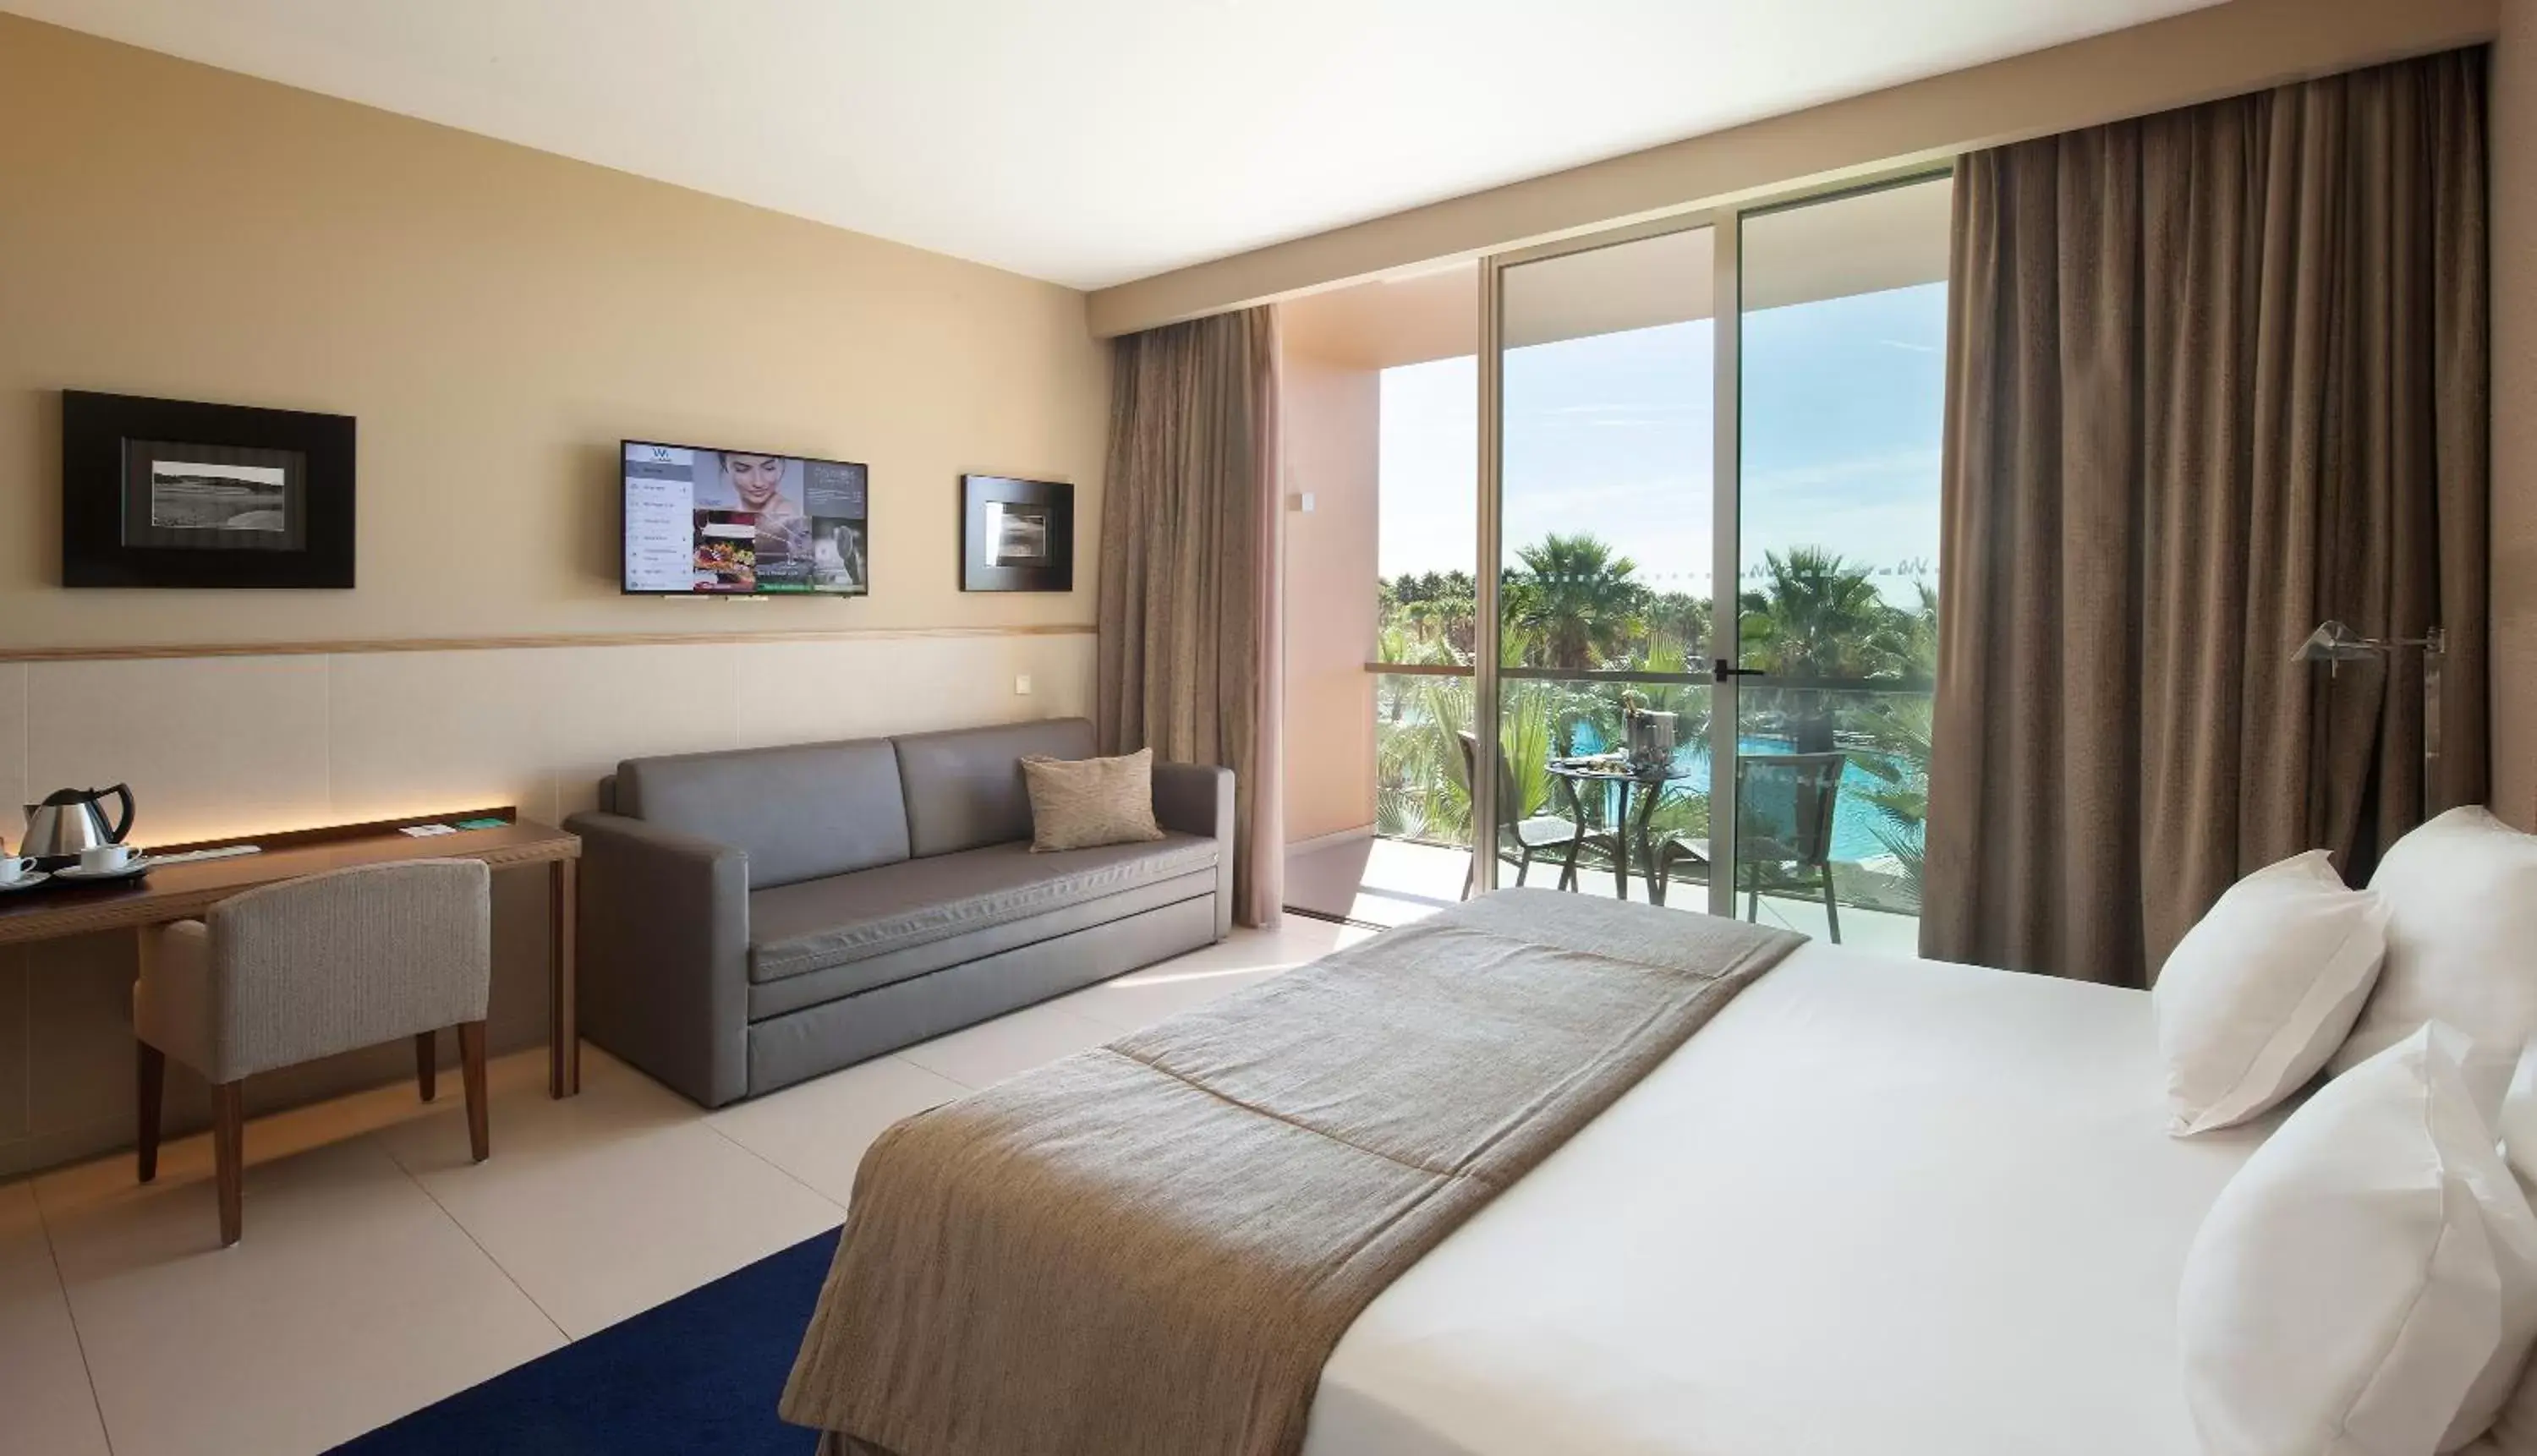 Prestige Family Room with Pool or Garden View - Half Board Included in VidaMar Resort Hotel Algarve